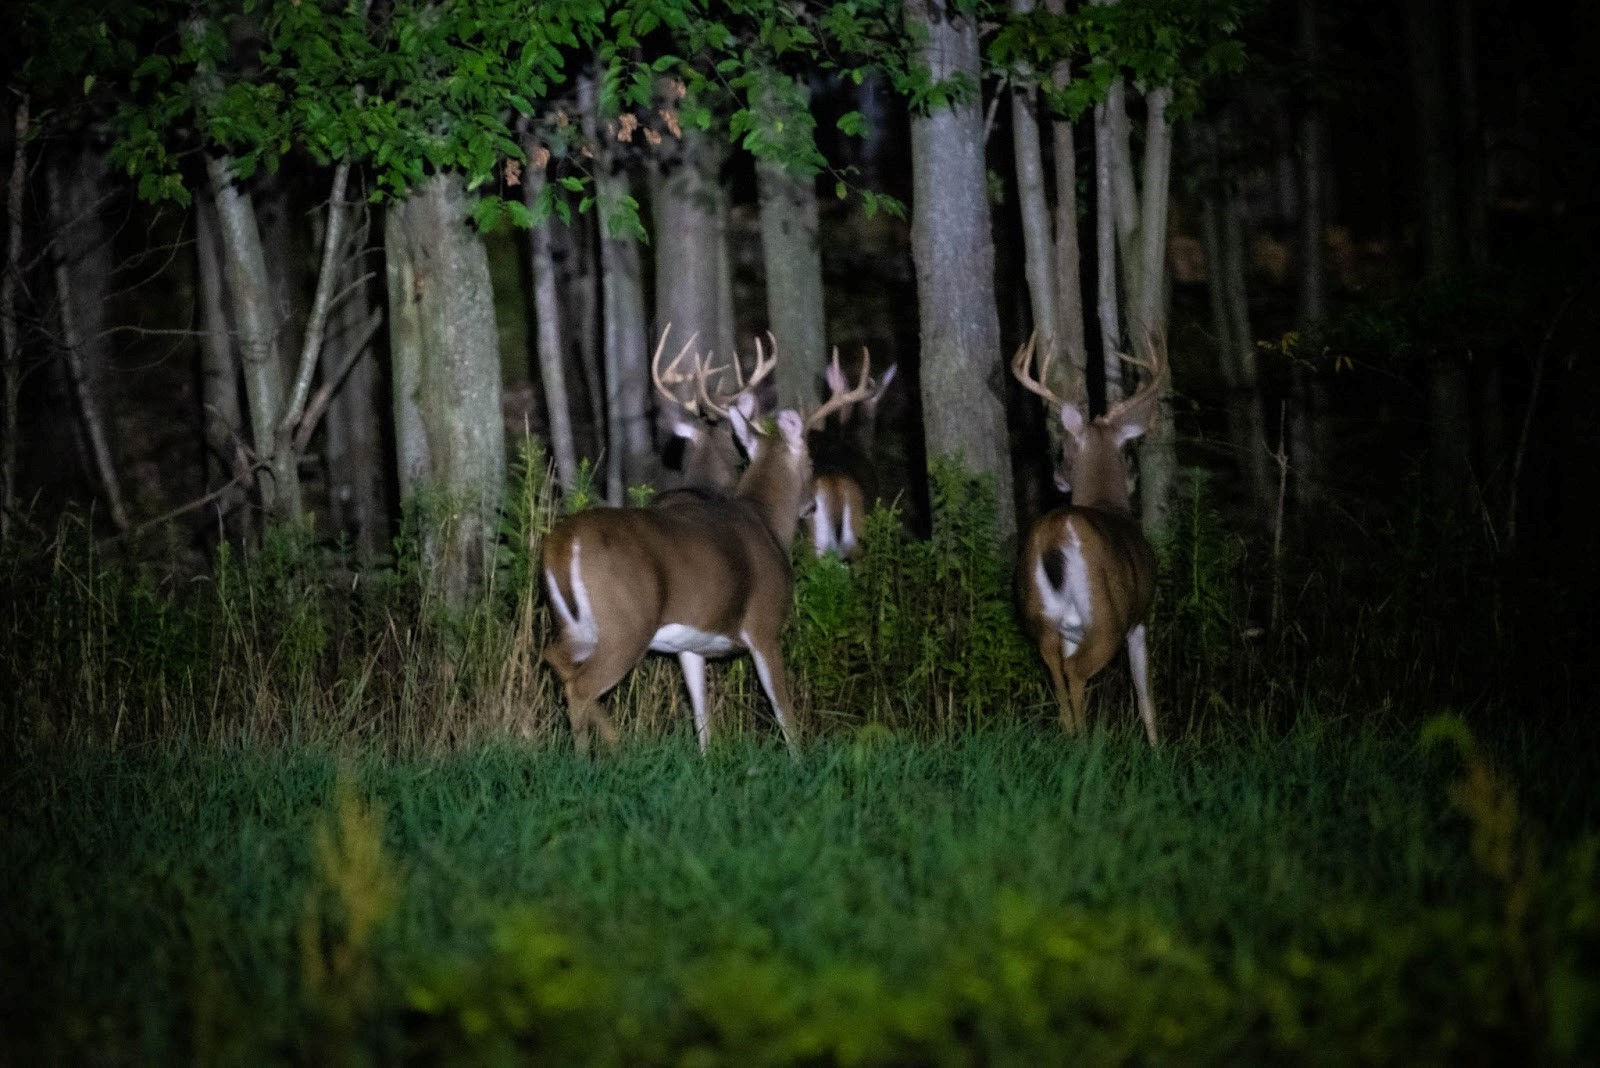 Bucks on trail cam photo by AccuForage PA Wilds